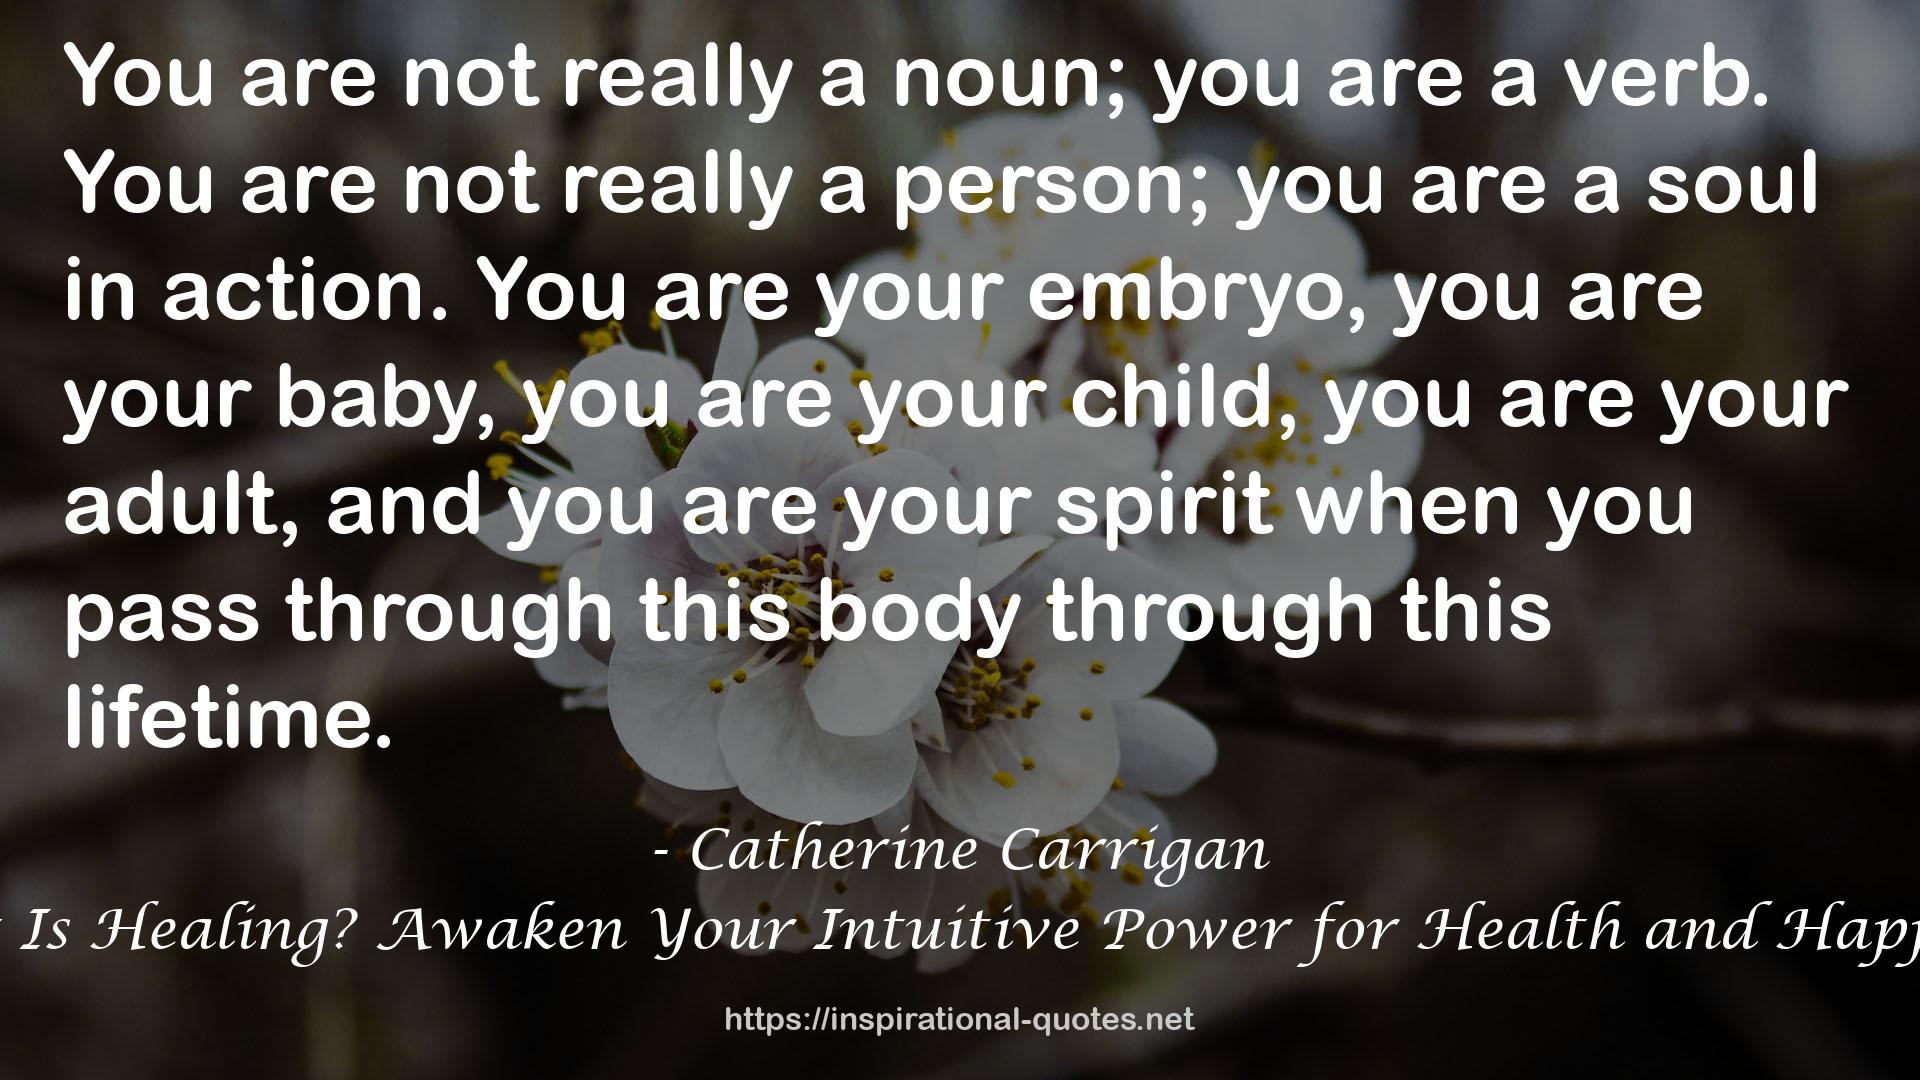 Catherine Carrigan QUOTES